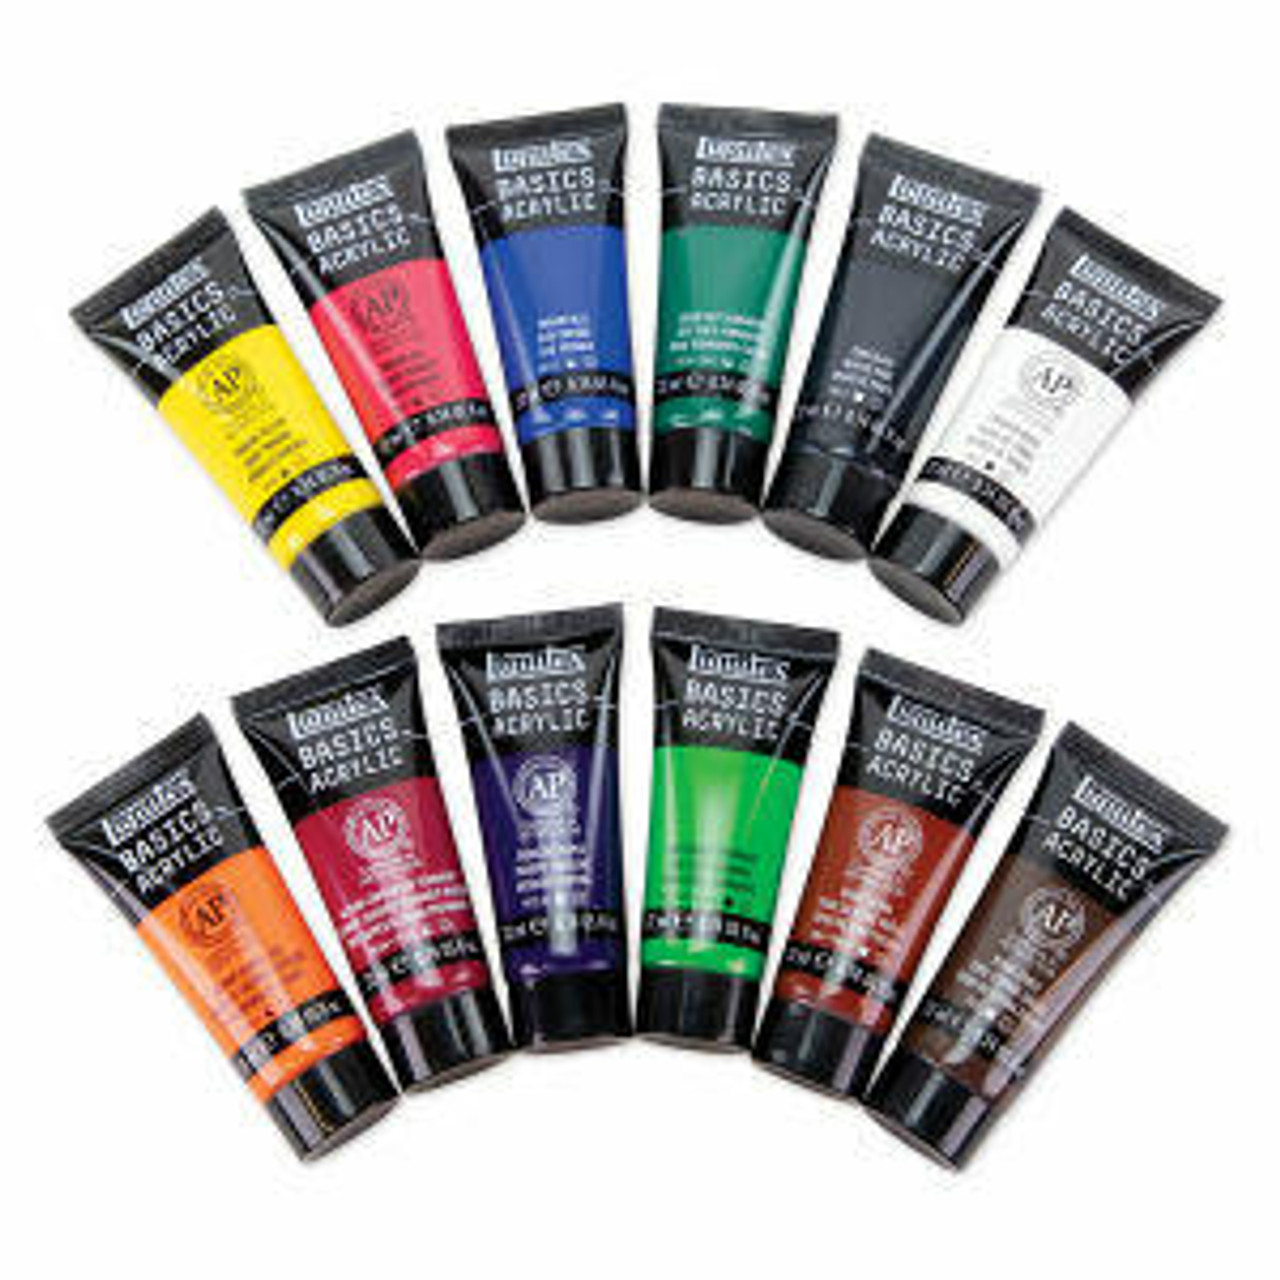 Summersoap Mini Acrylic Color 12 colors Paint Set (3mlx12) Mix Color  Activity Additional Basic Color for